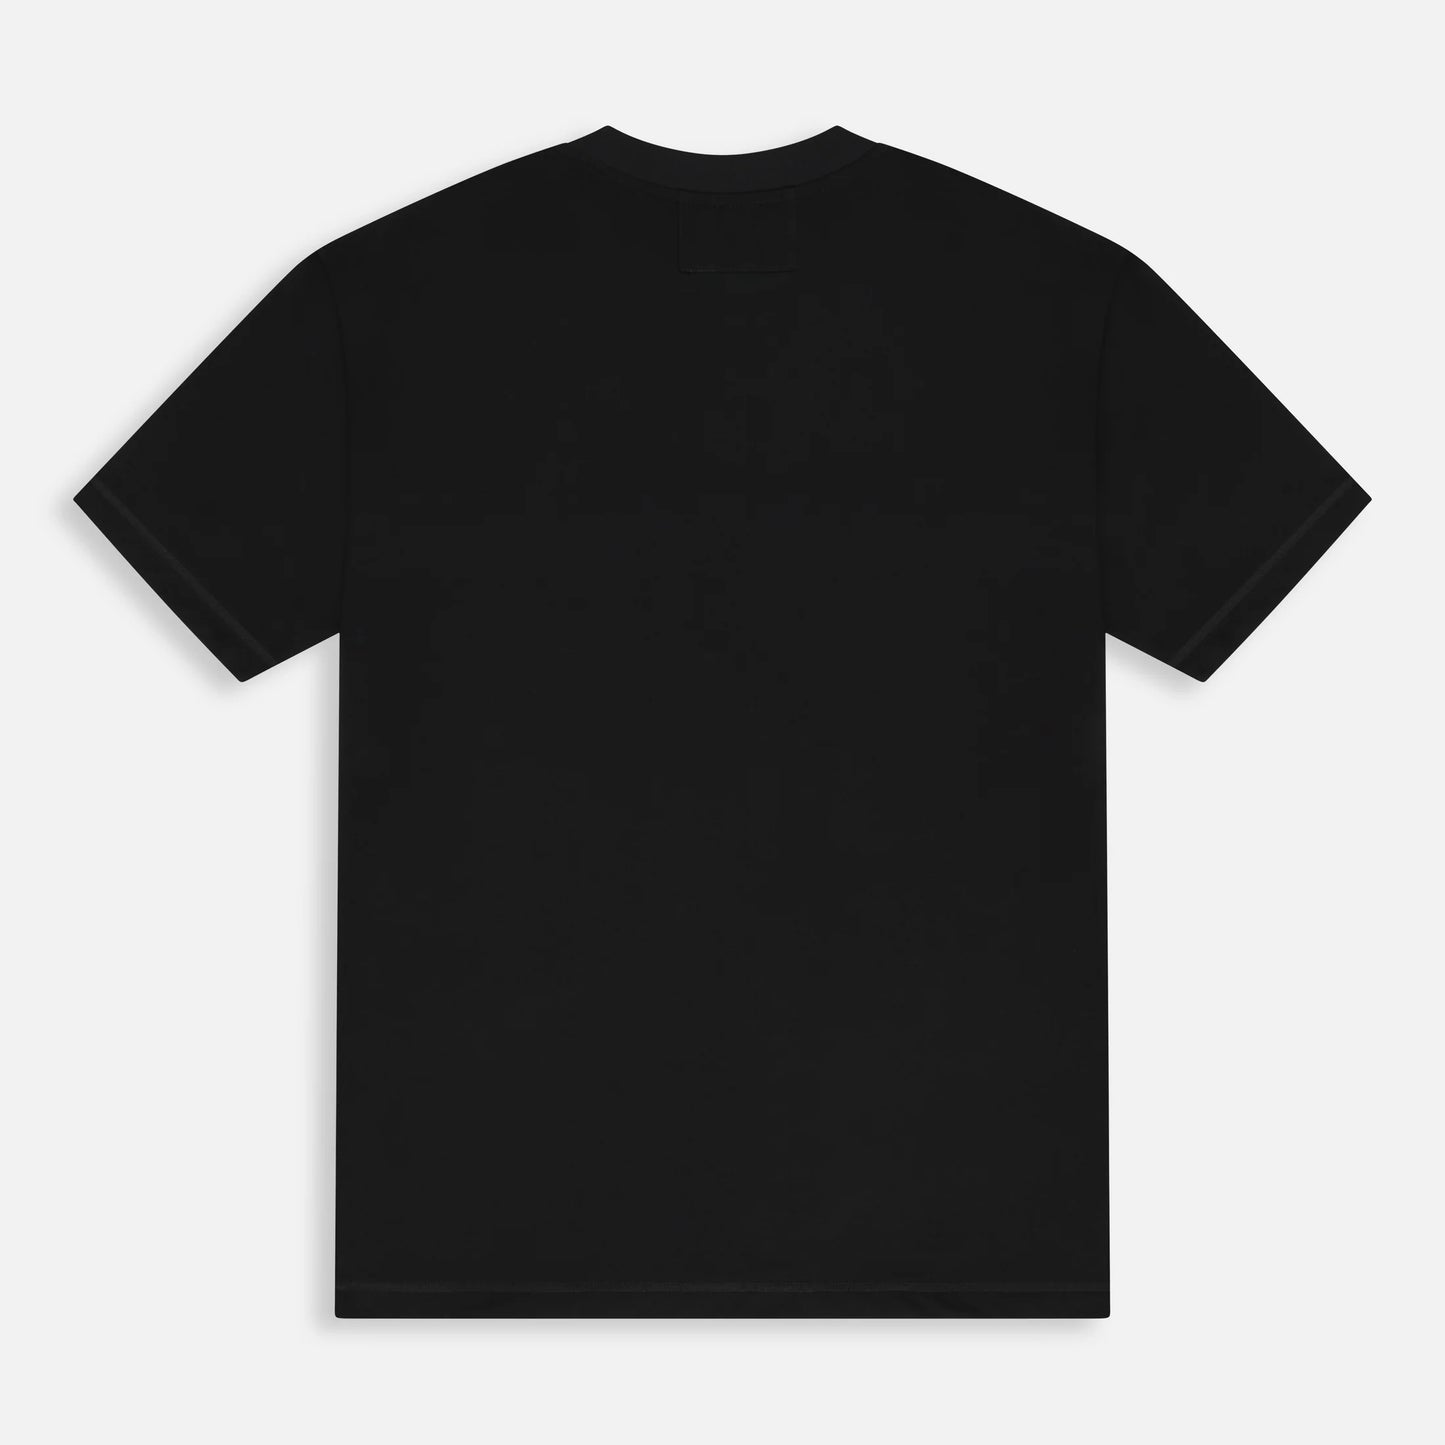 Arcade T-shirt - Black